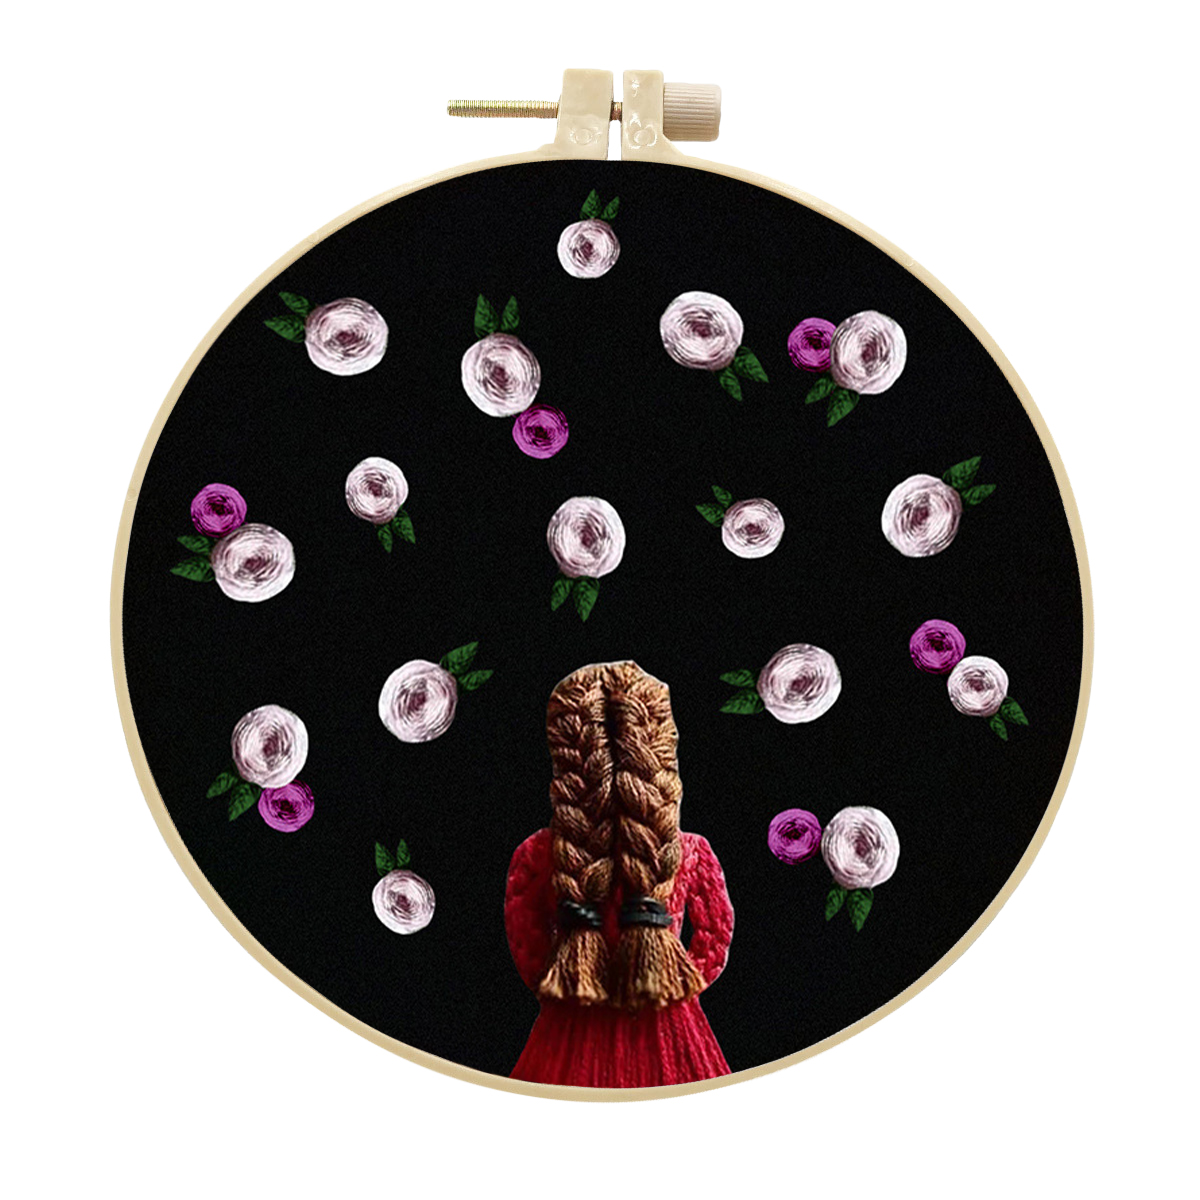 Handmade Embroidery Kit Cross stitch kit for Adult Beginner - Girl and Lovely flowers Pattern